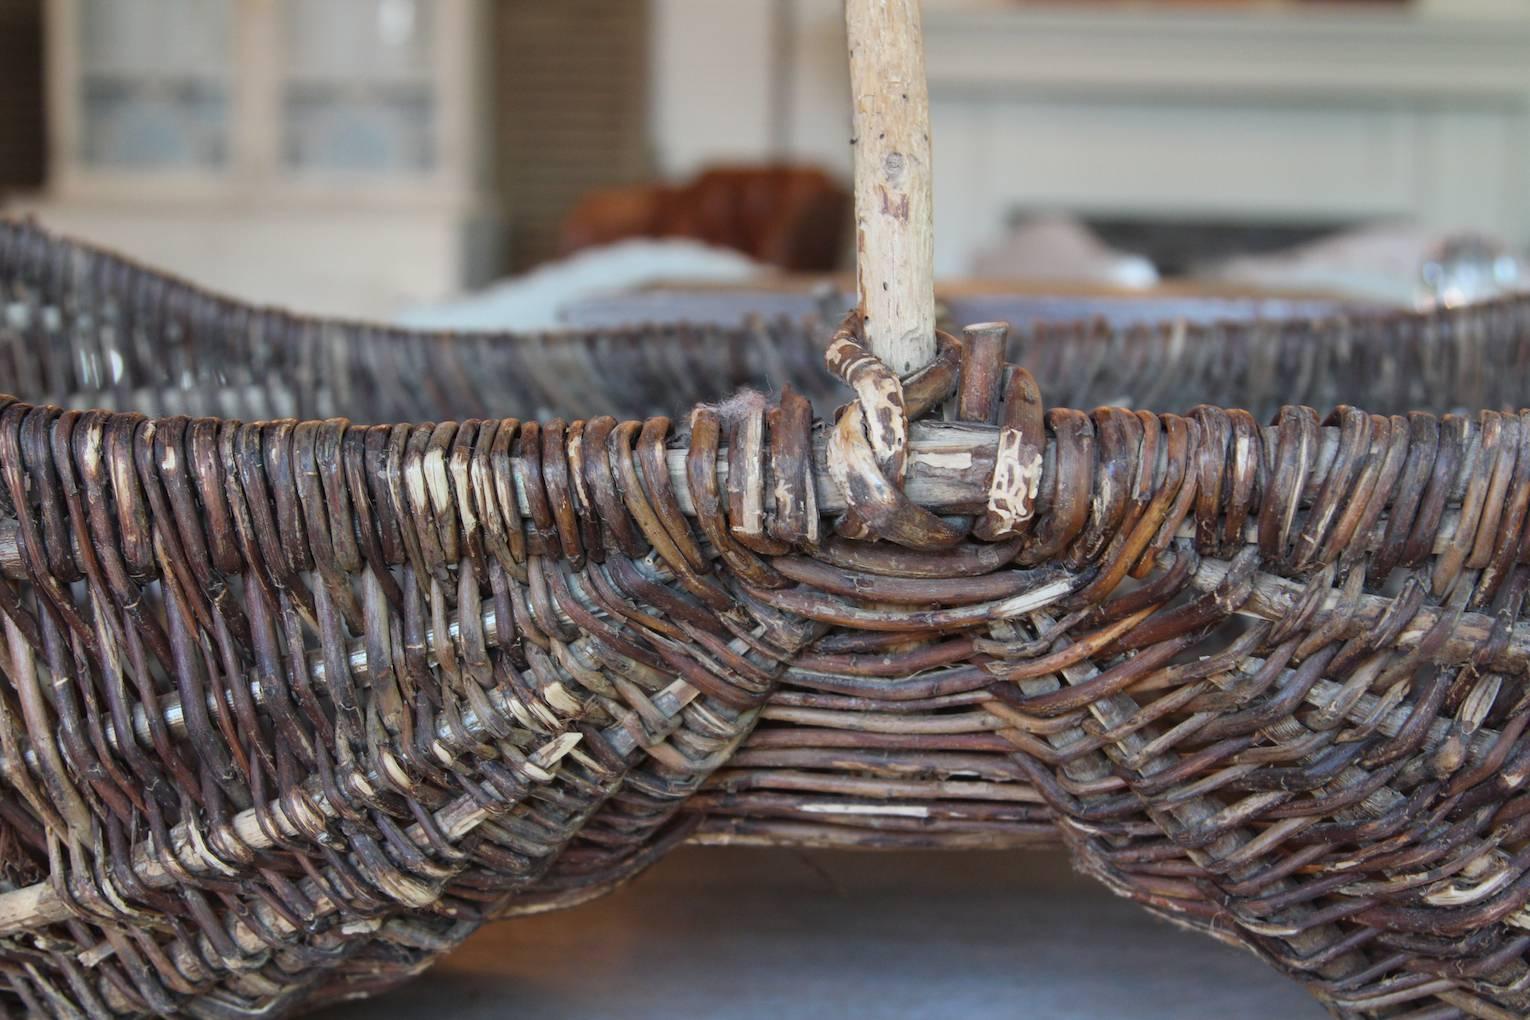 Late 19th century French grape gathering basket.